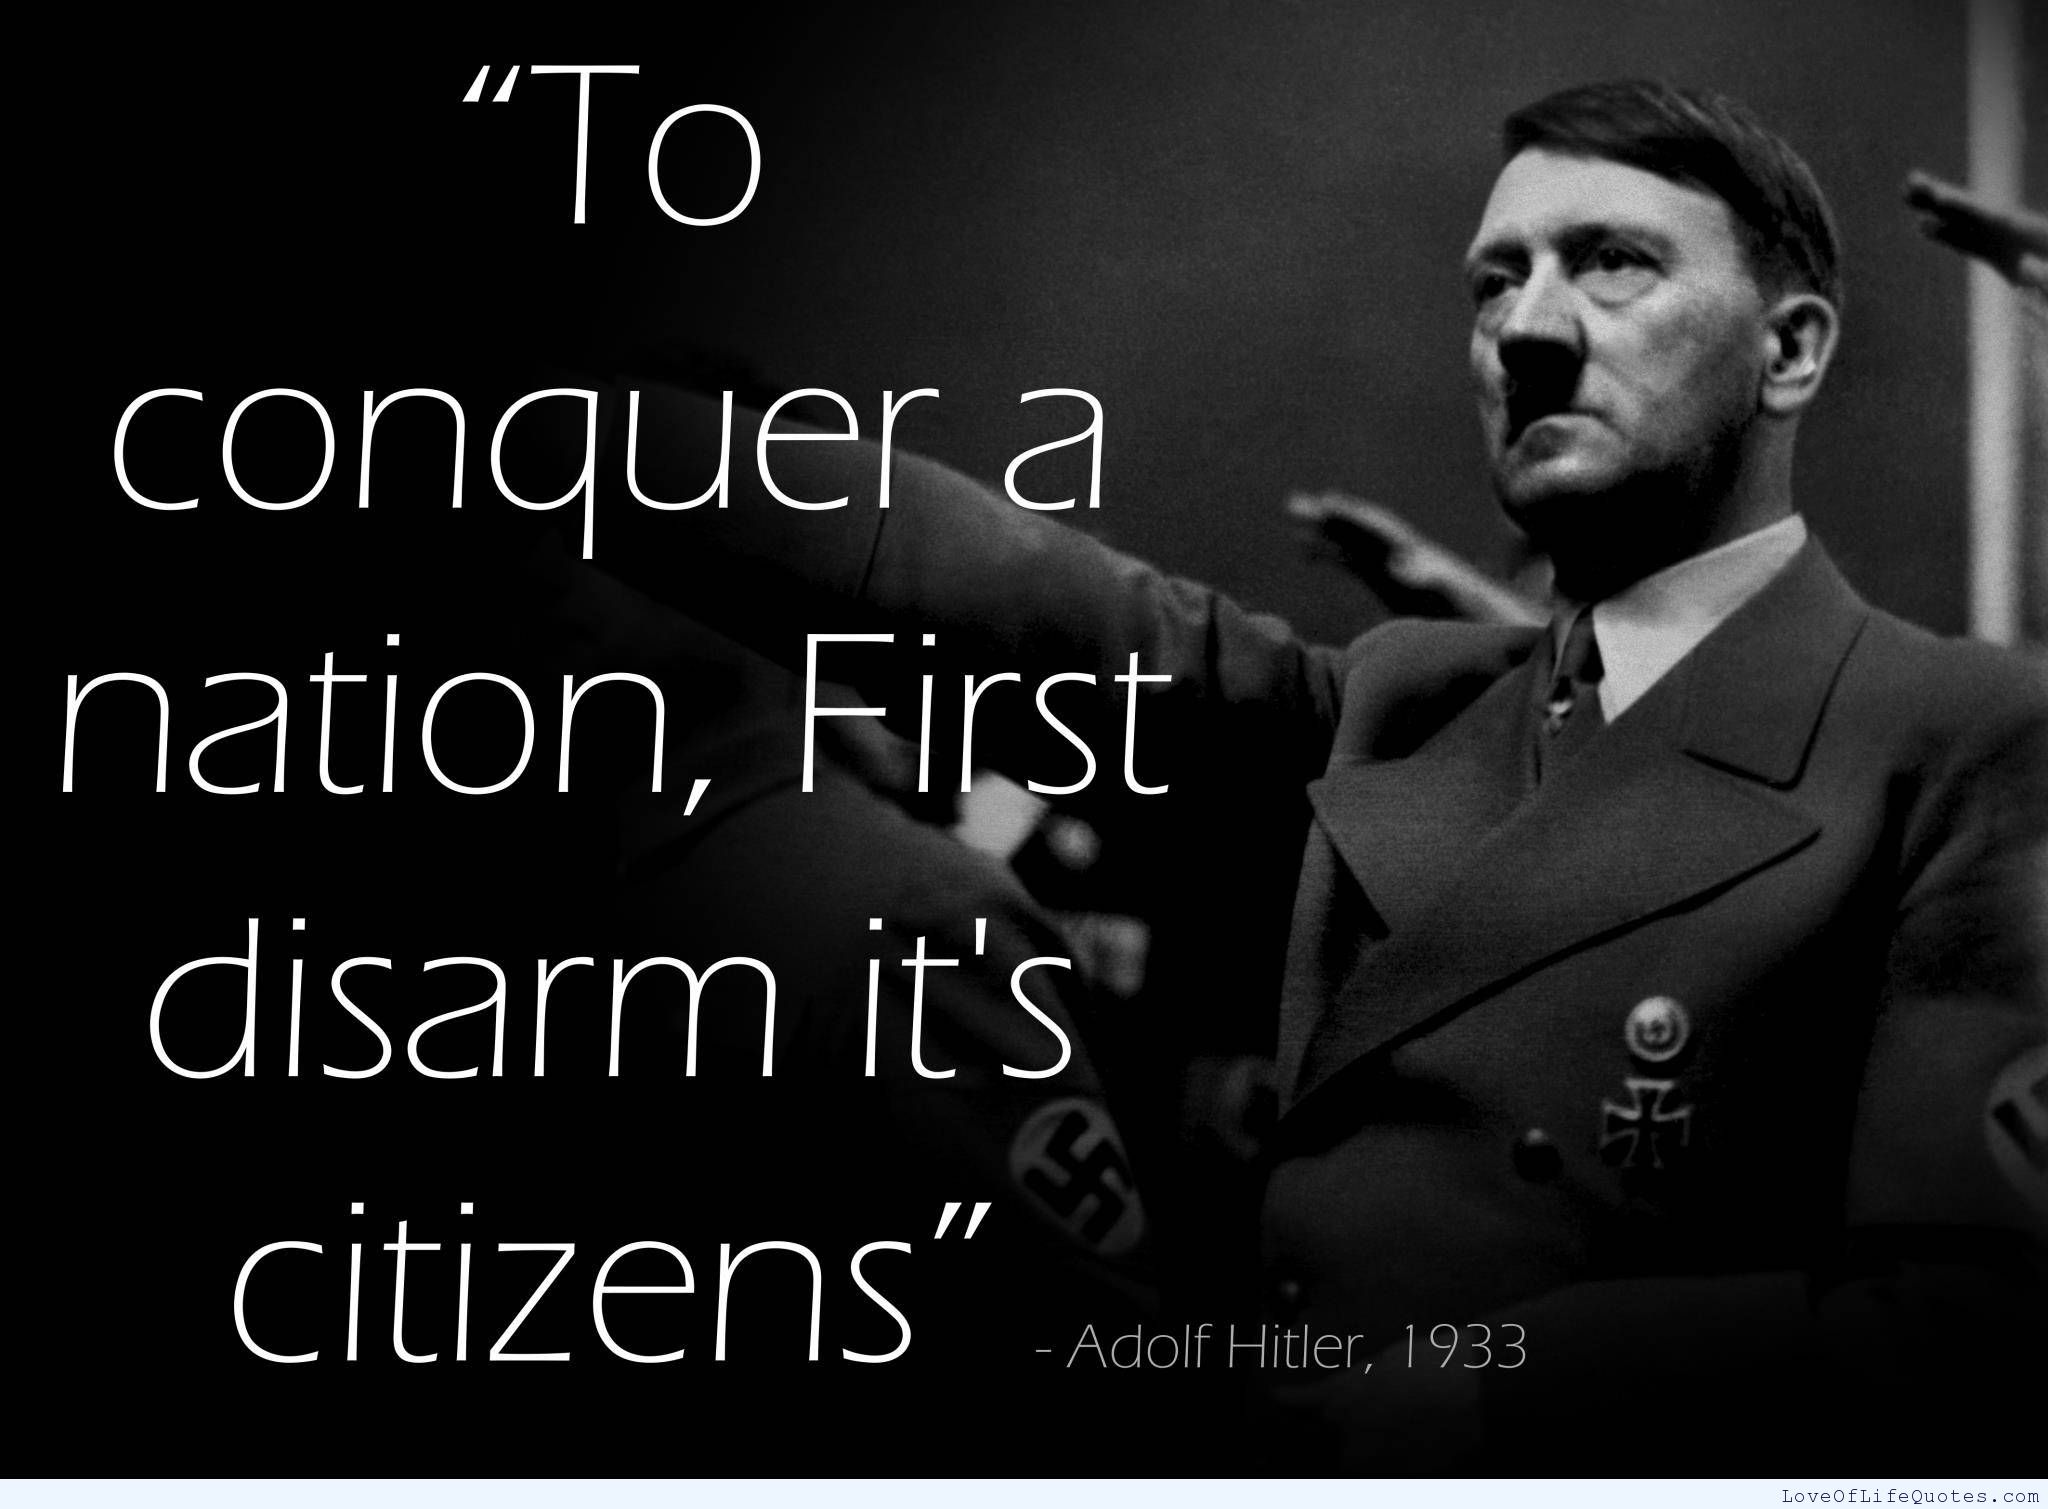 351179649-Adolf-Hitler-quote-on-disarming-citizens.jpg